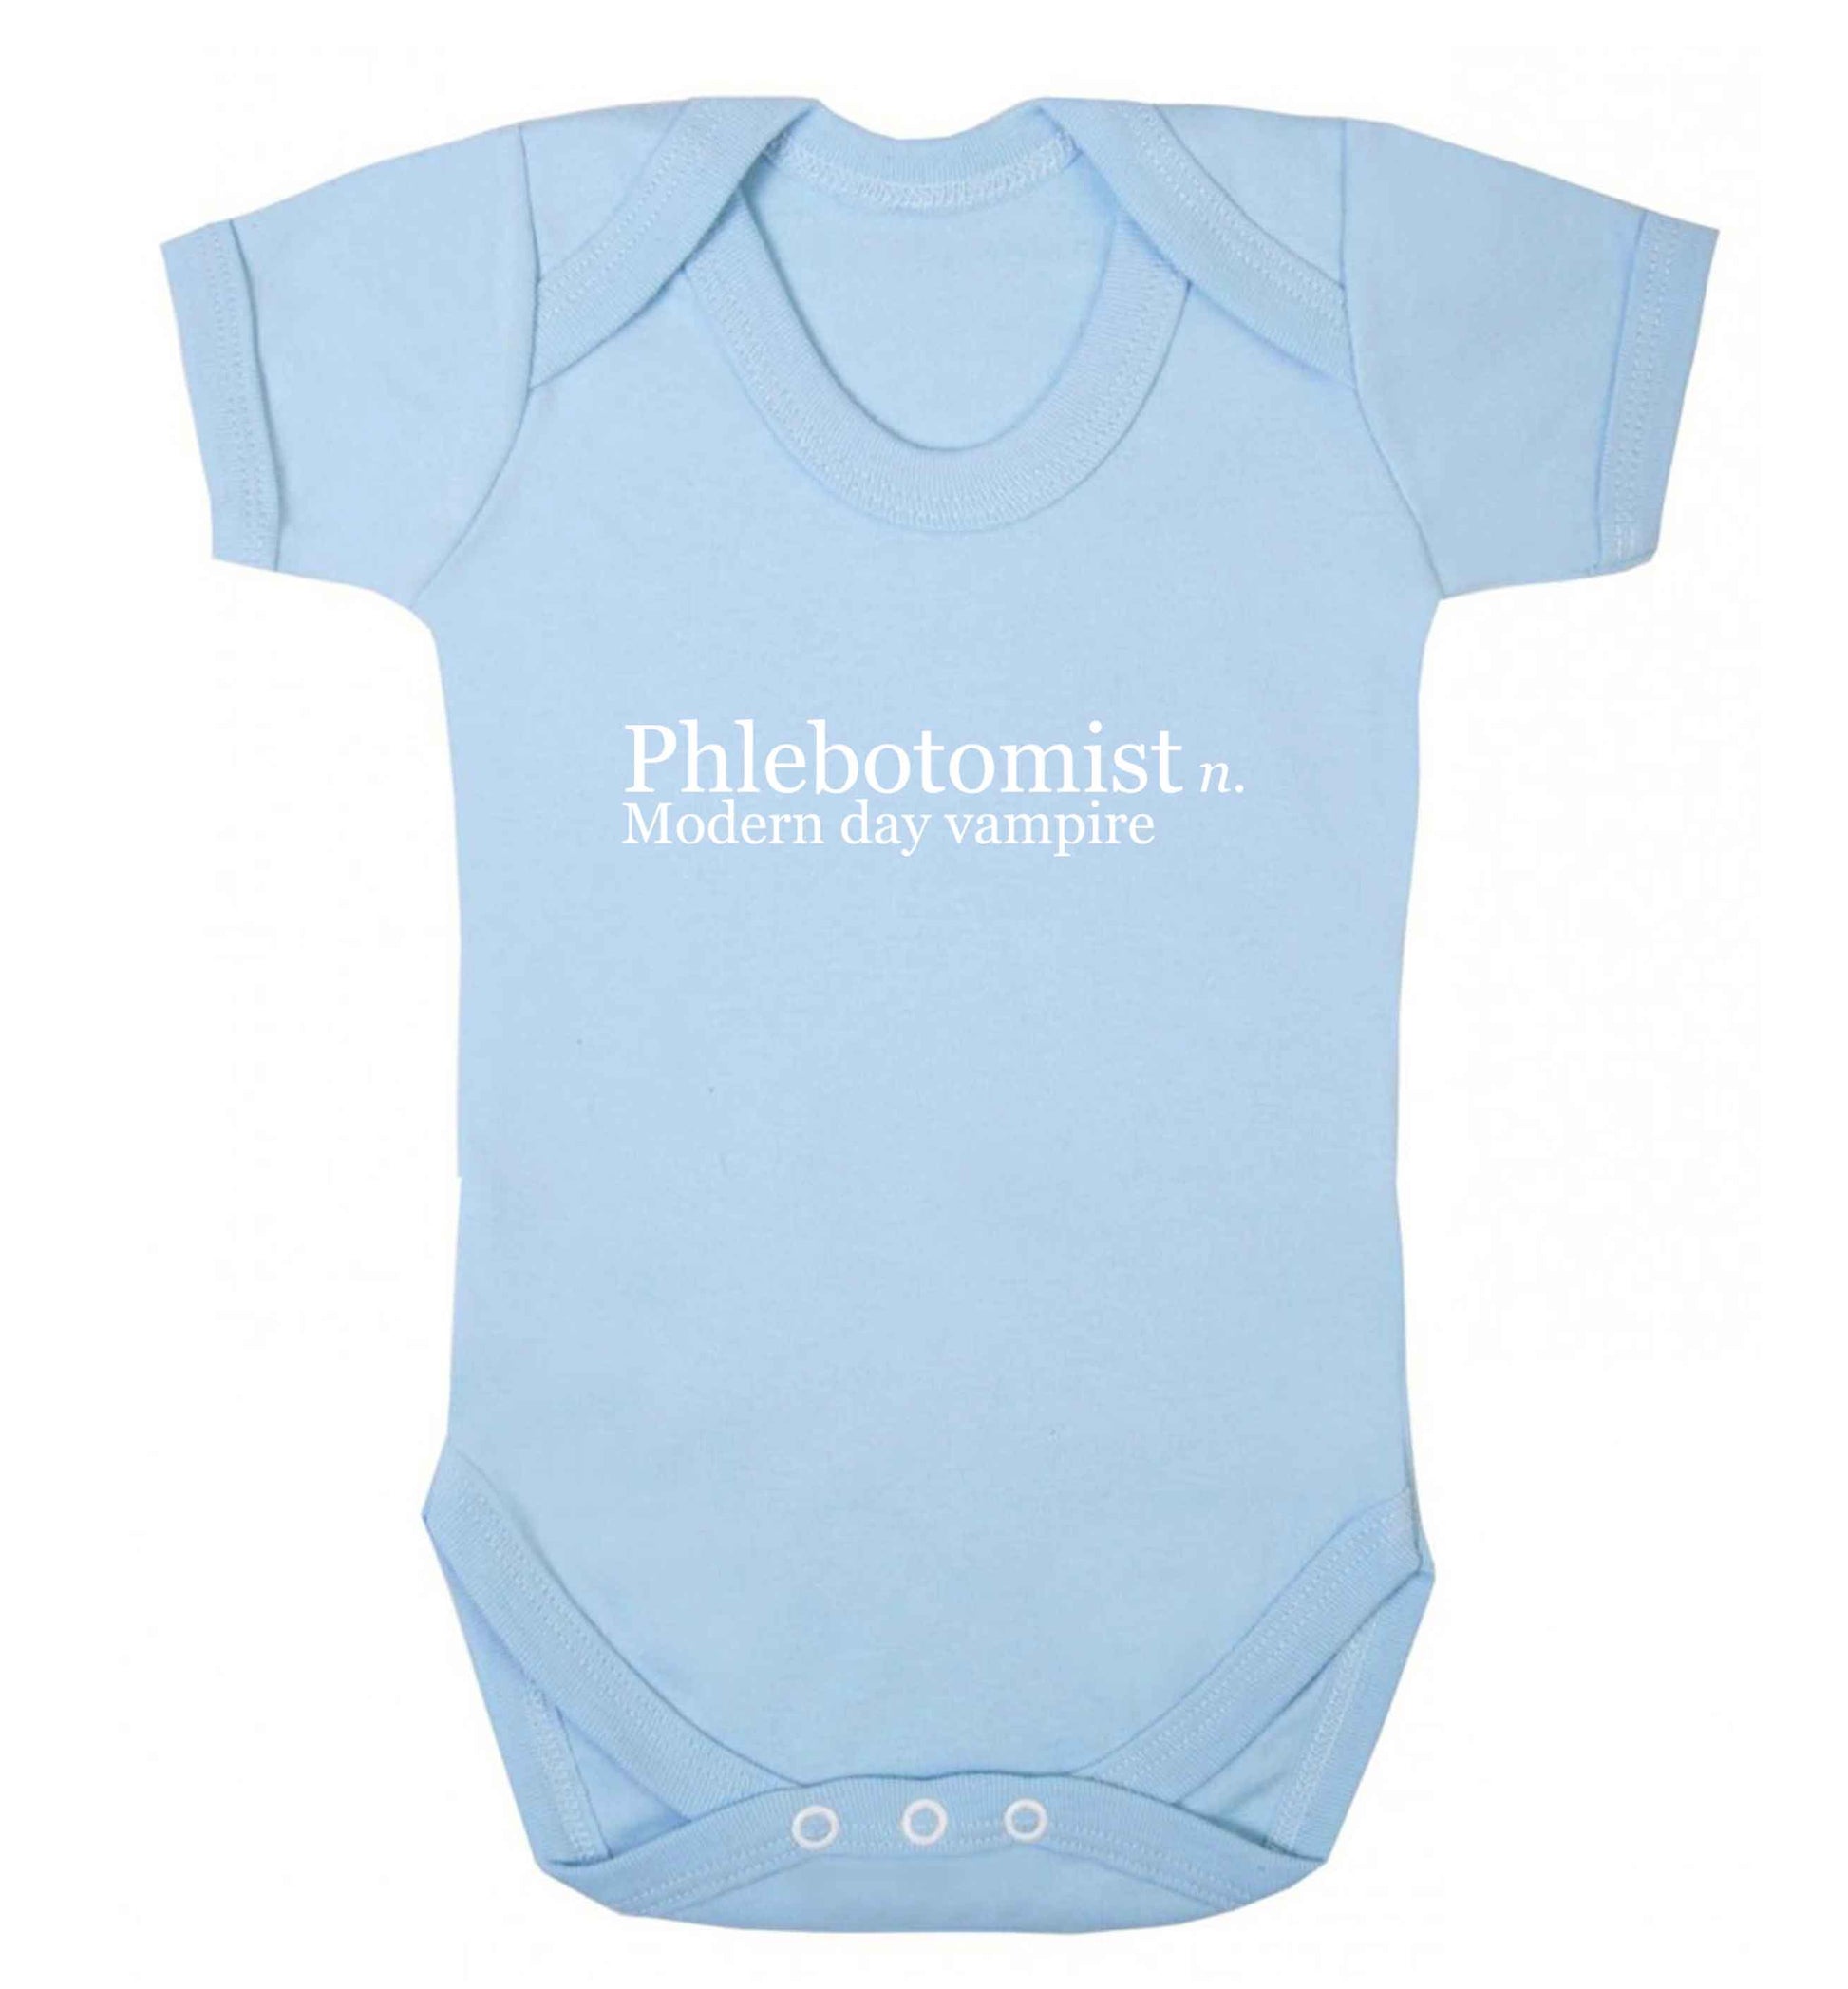 Phlebotomist - Modern day vampire baby vest pale blue 18-24 months